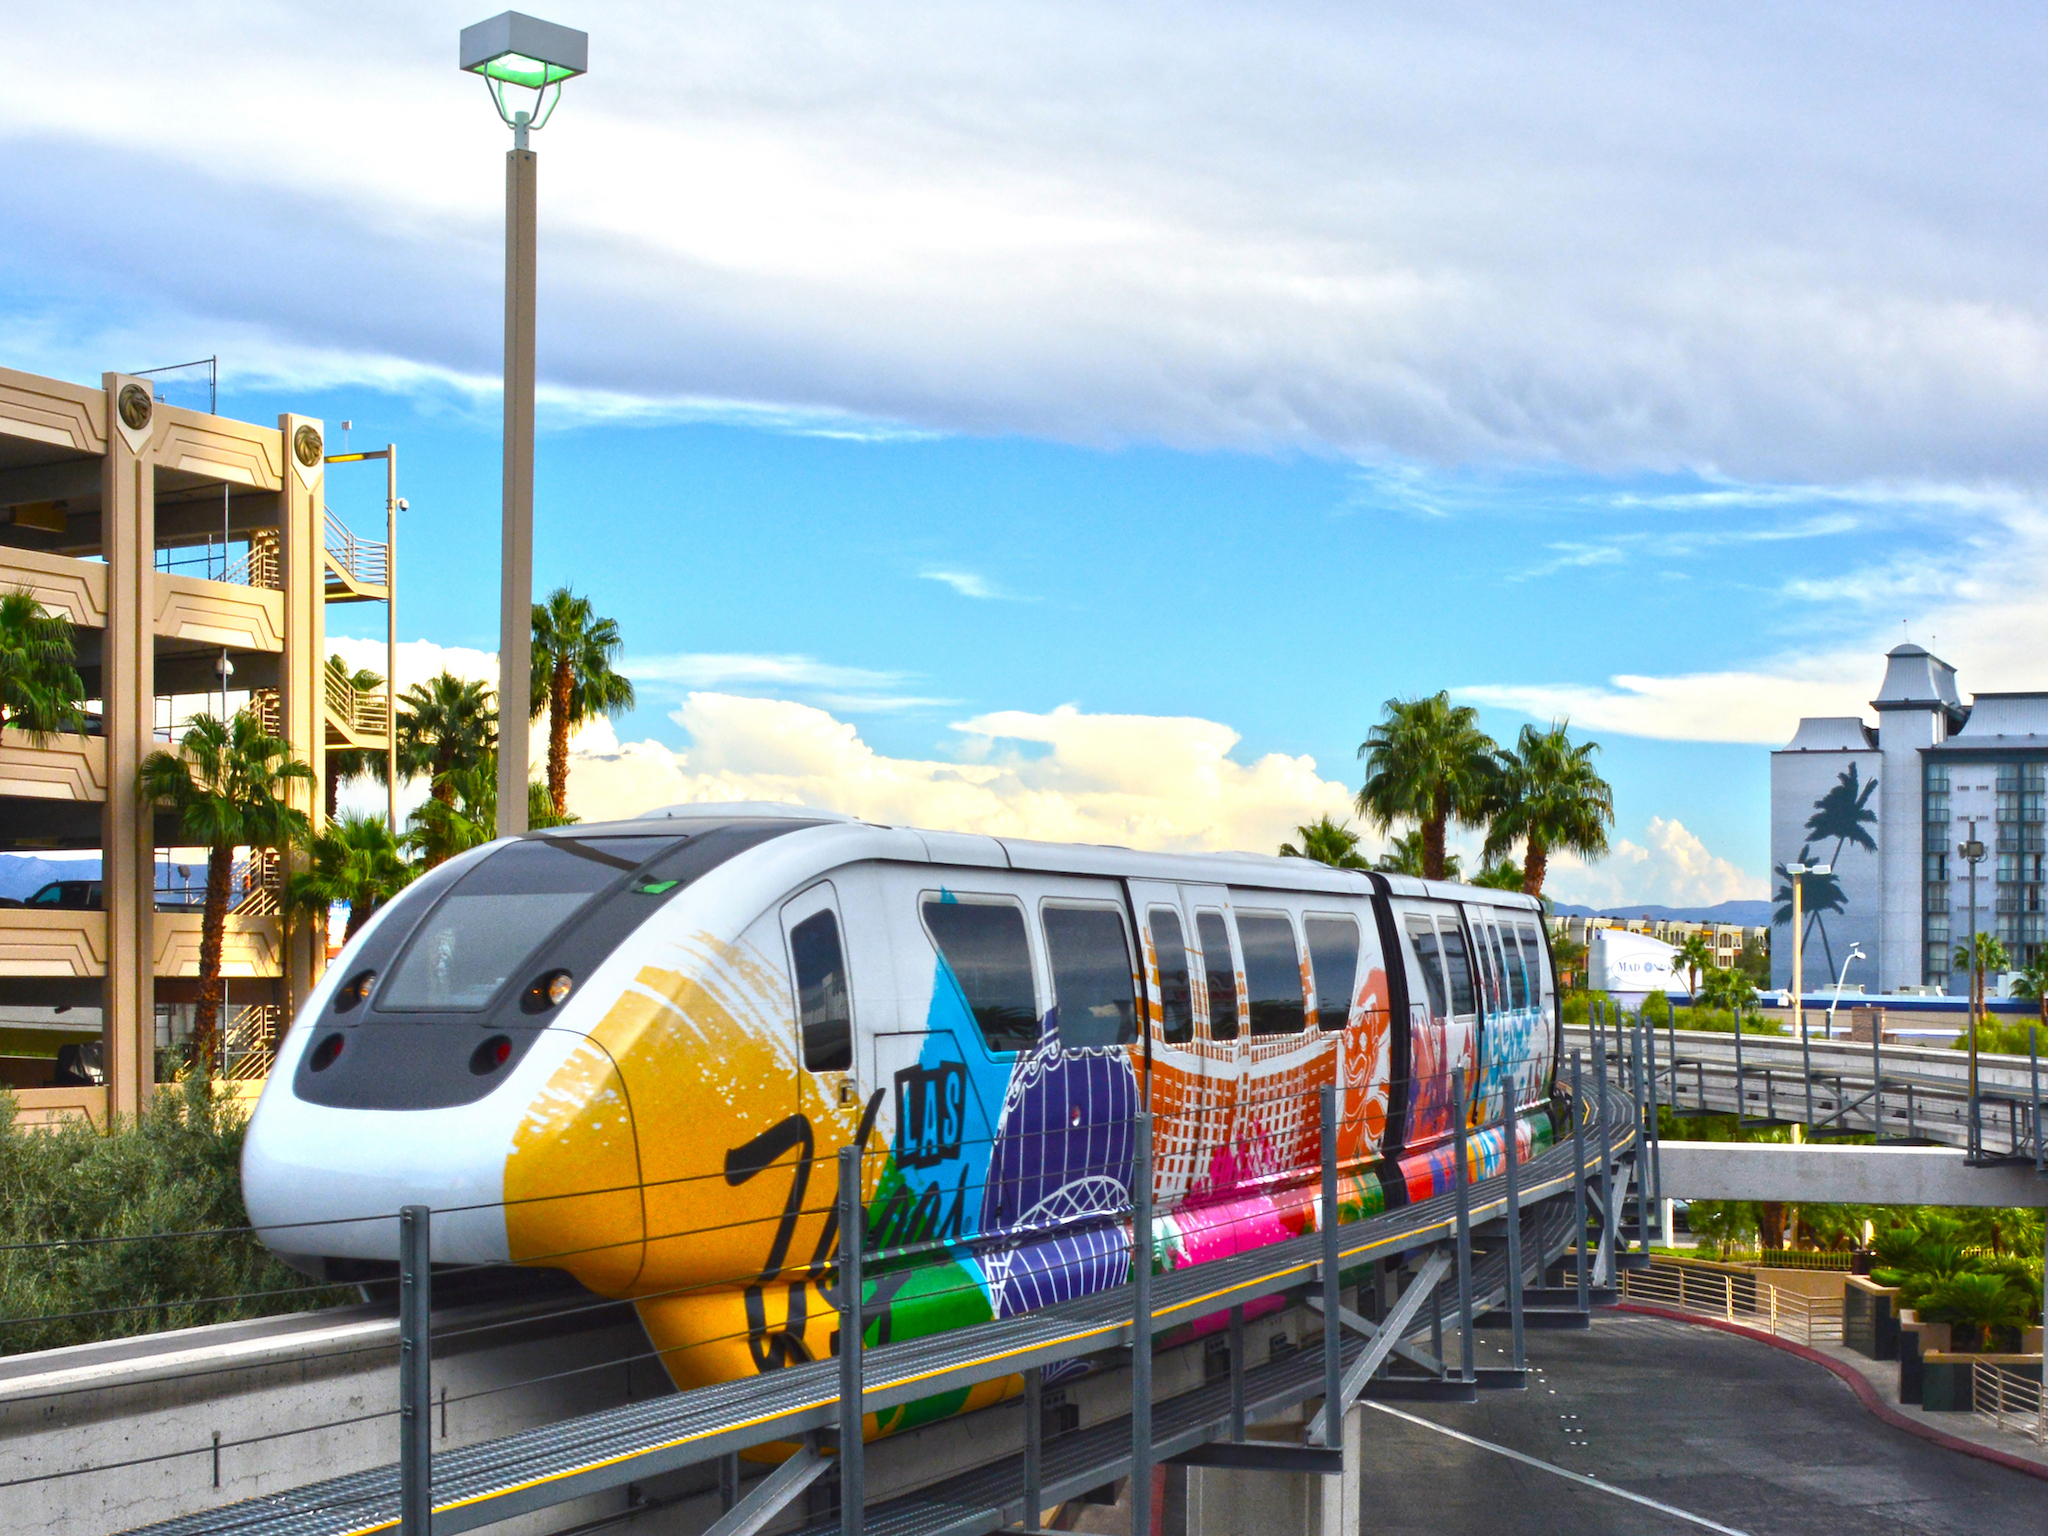 Monorail in Las Vegas, Nevada